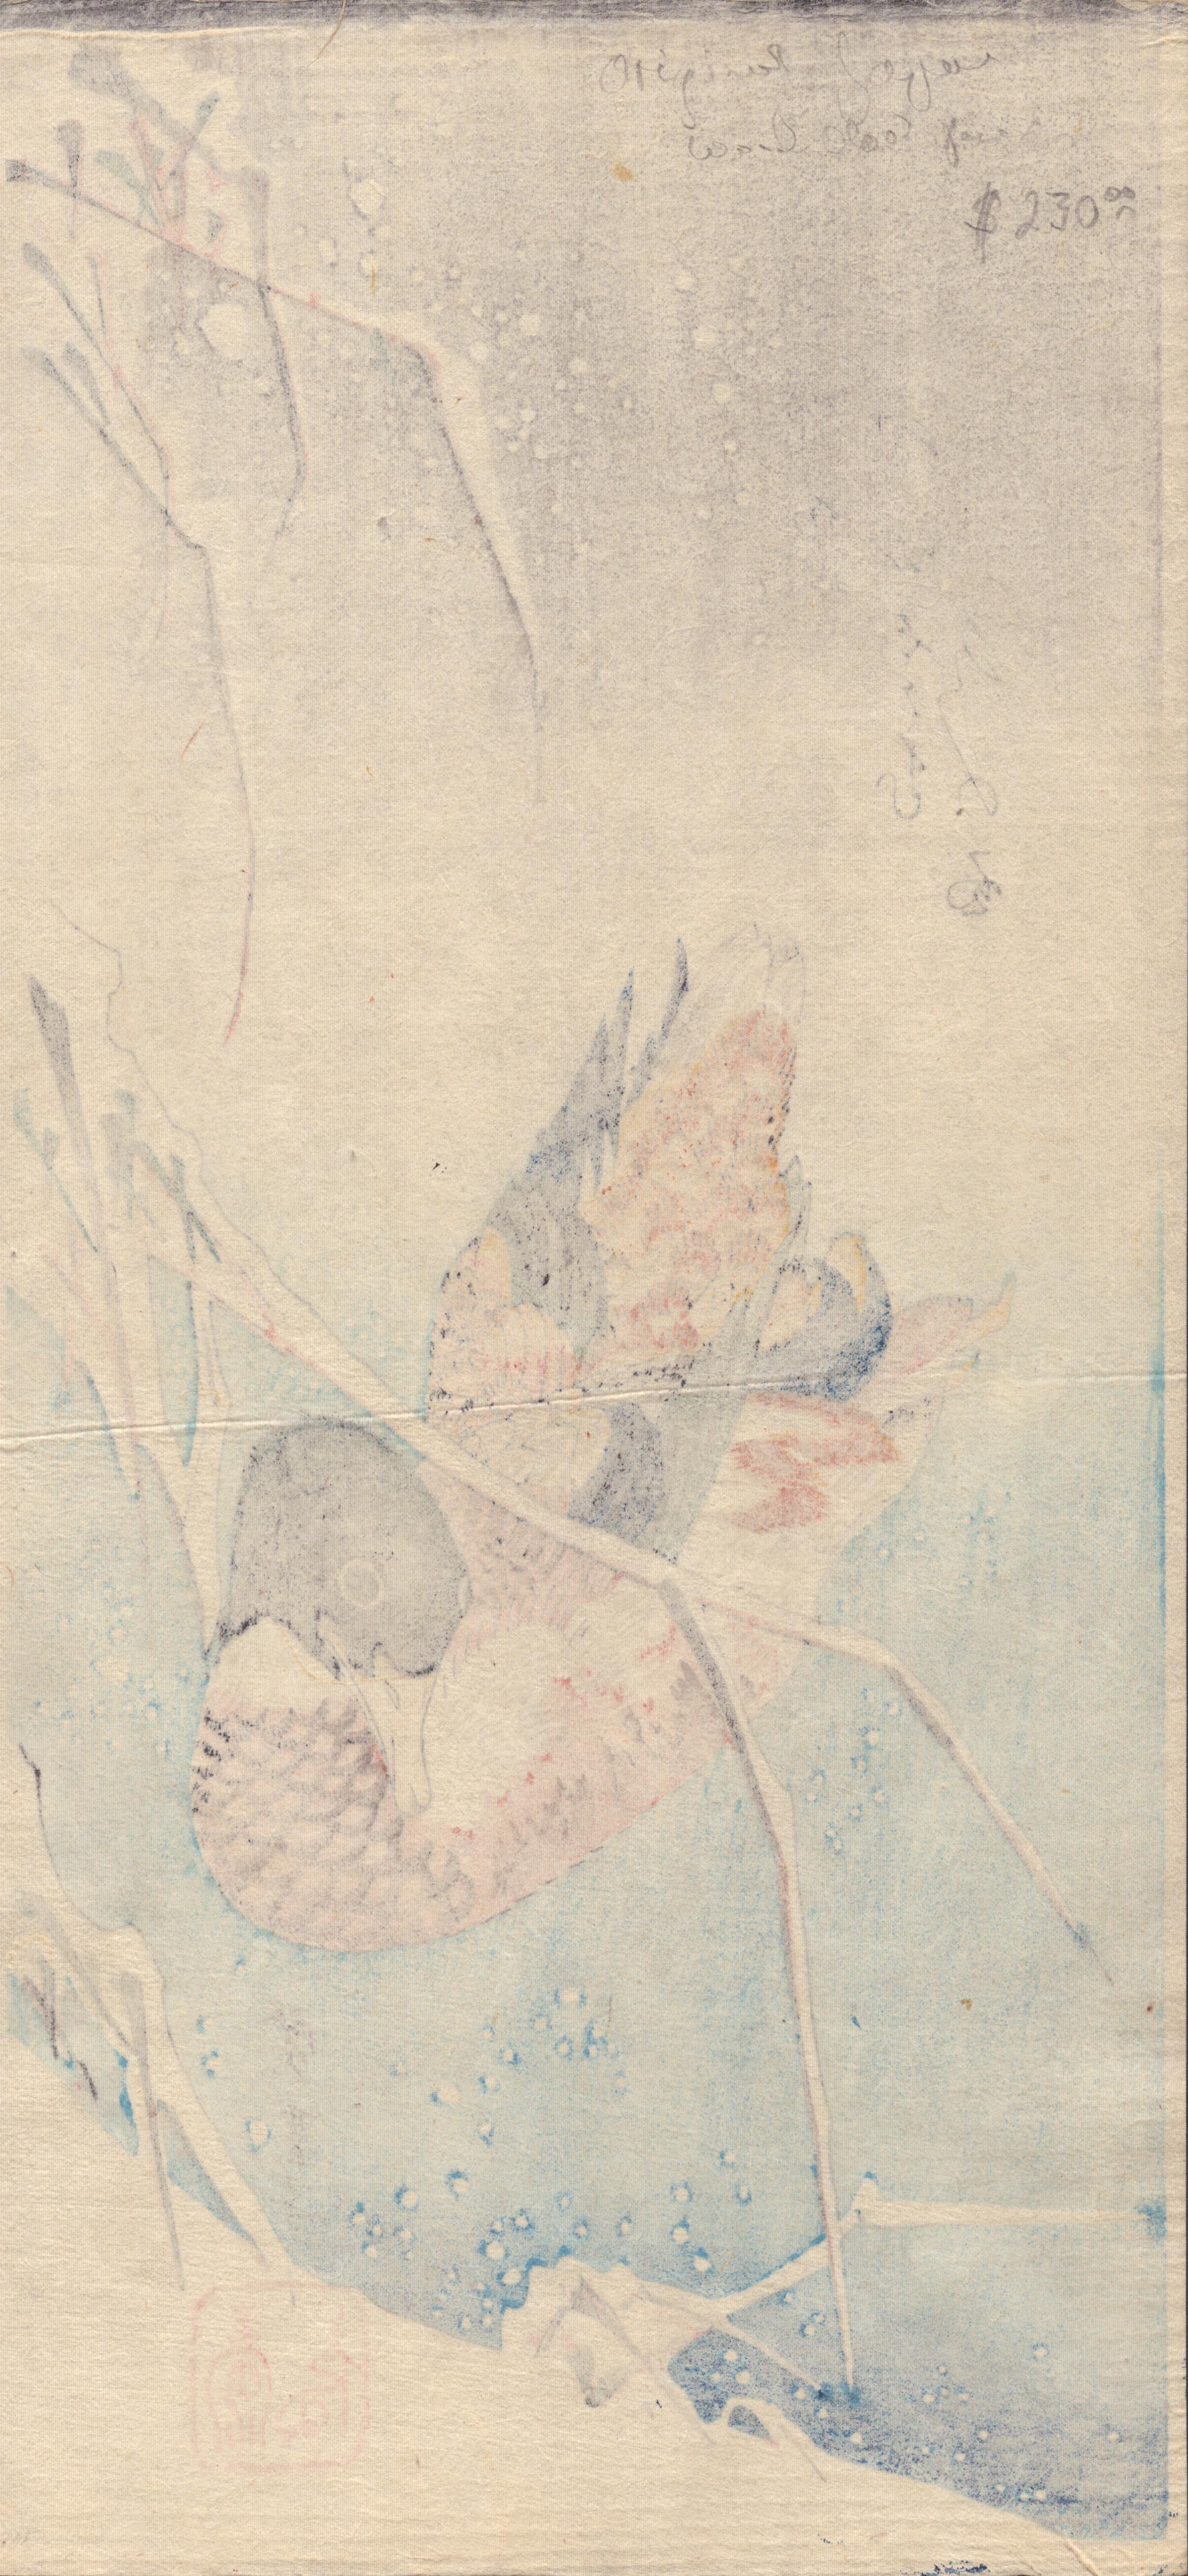 Hiroshige (1797-1858) - Duck in Snow 雪中芦に鴨 [Reproduction] - Print by Utagawa Hiroshige (Ando Hiroshige)